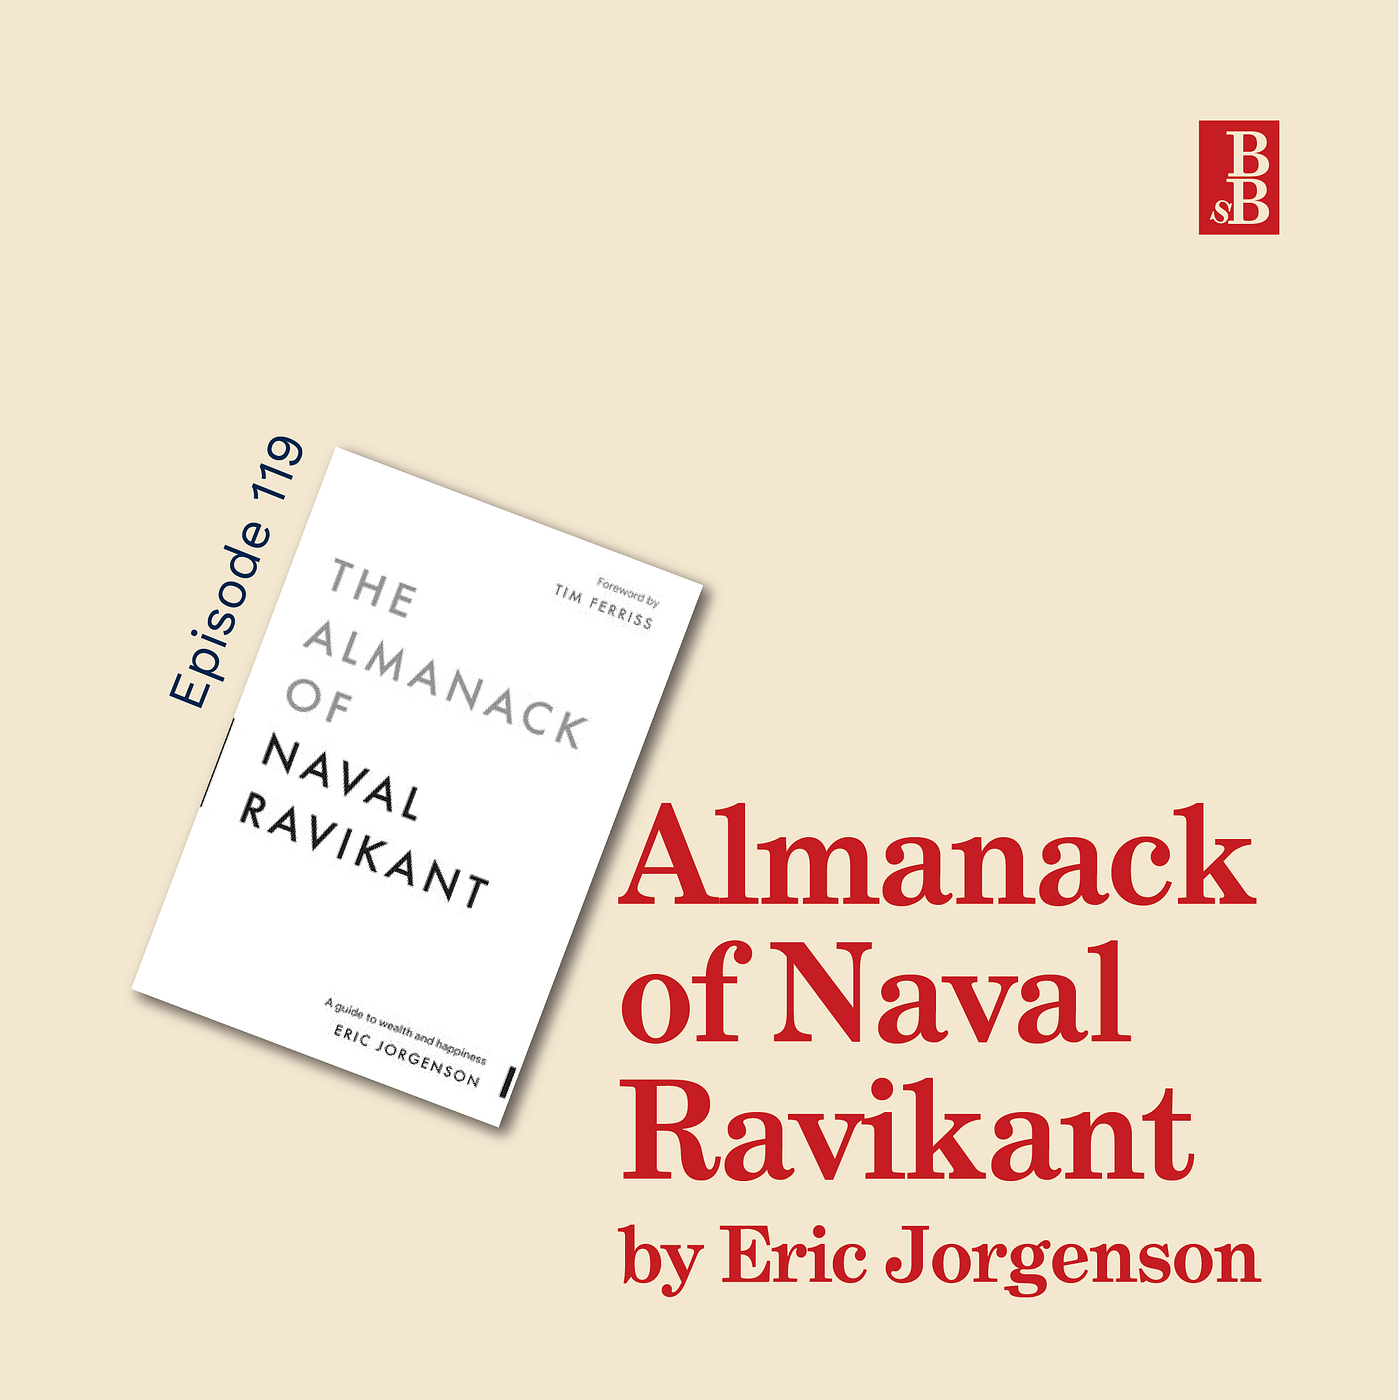 Illustrations for the Almanack of Naval Ravikant